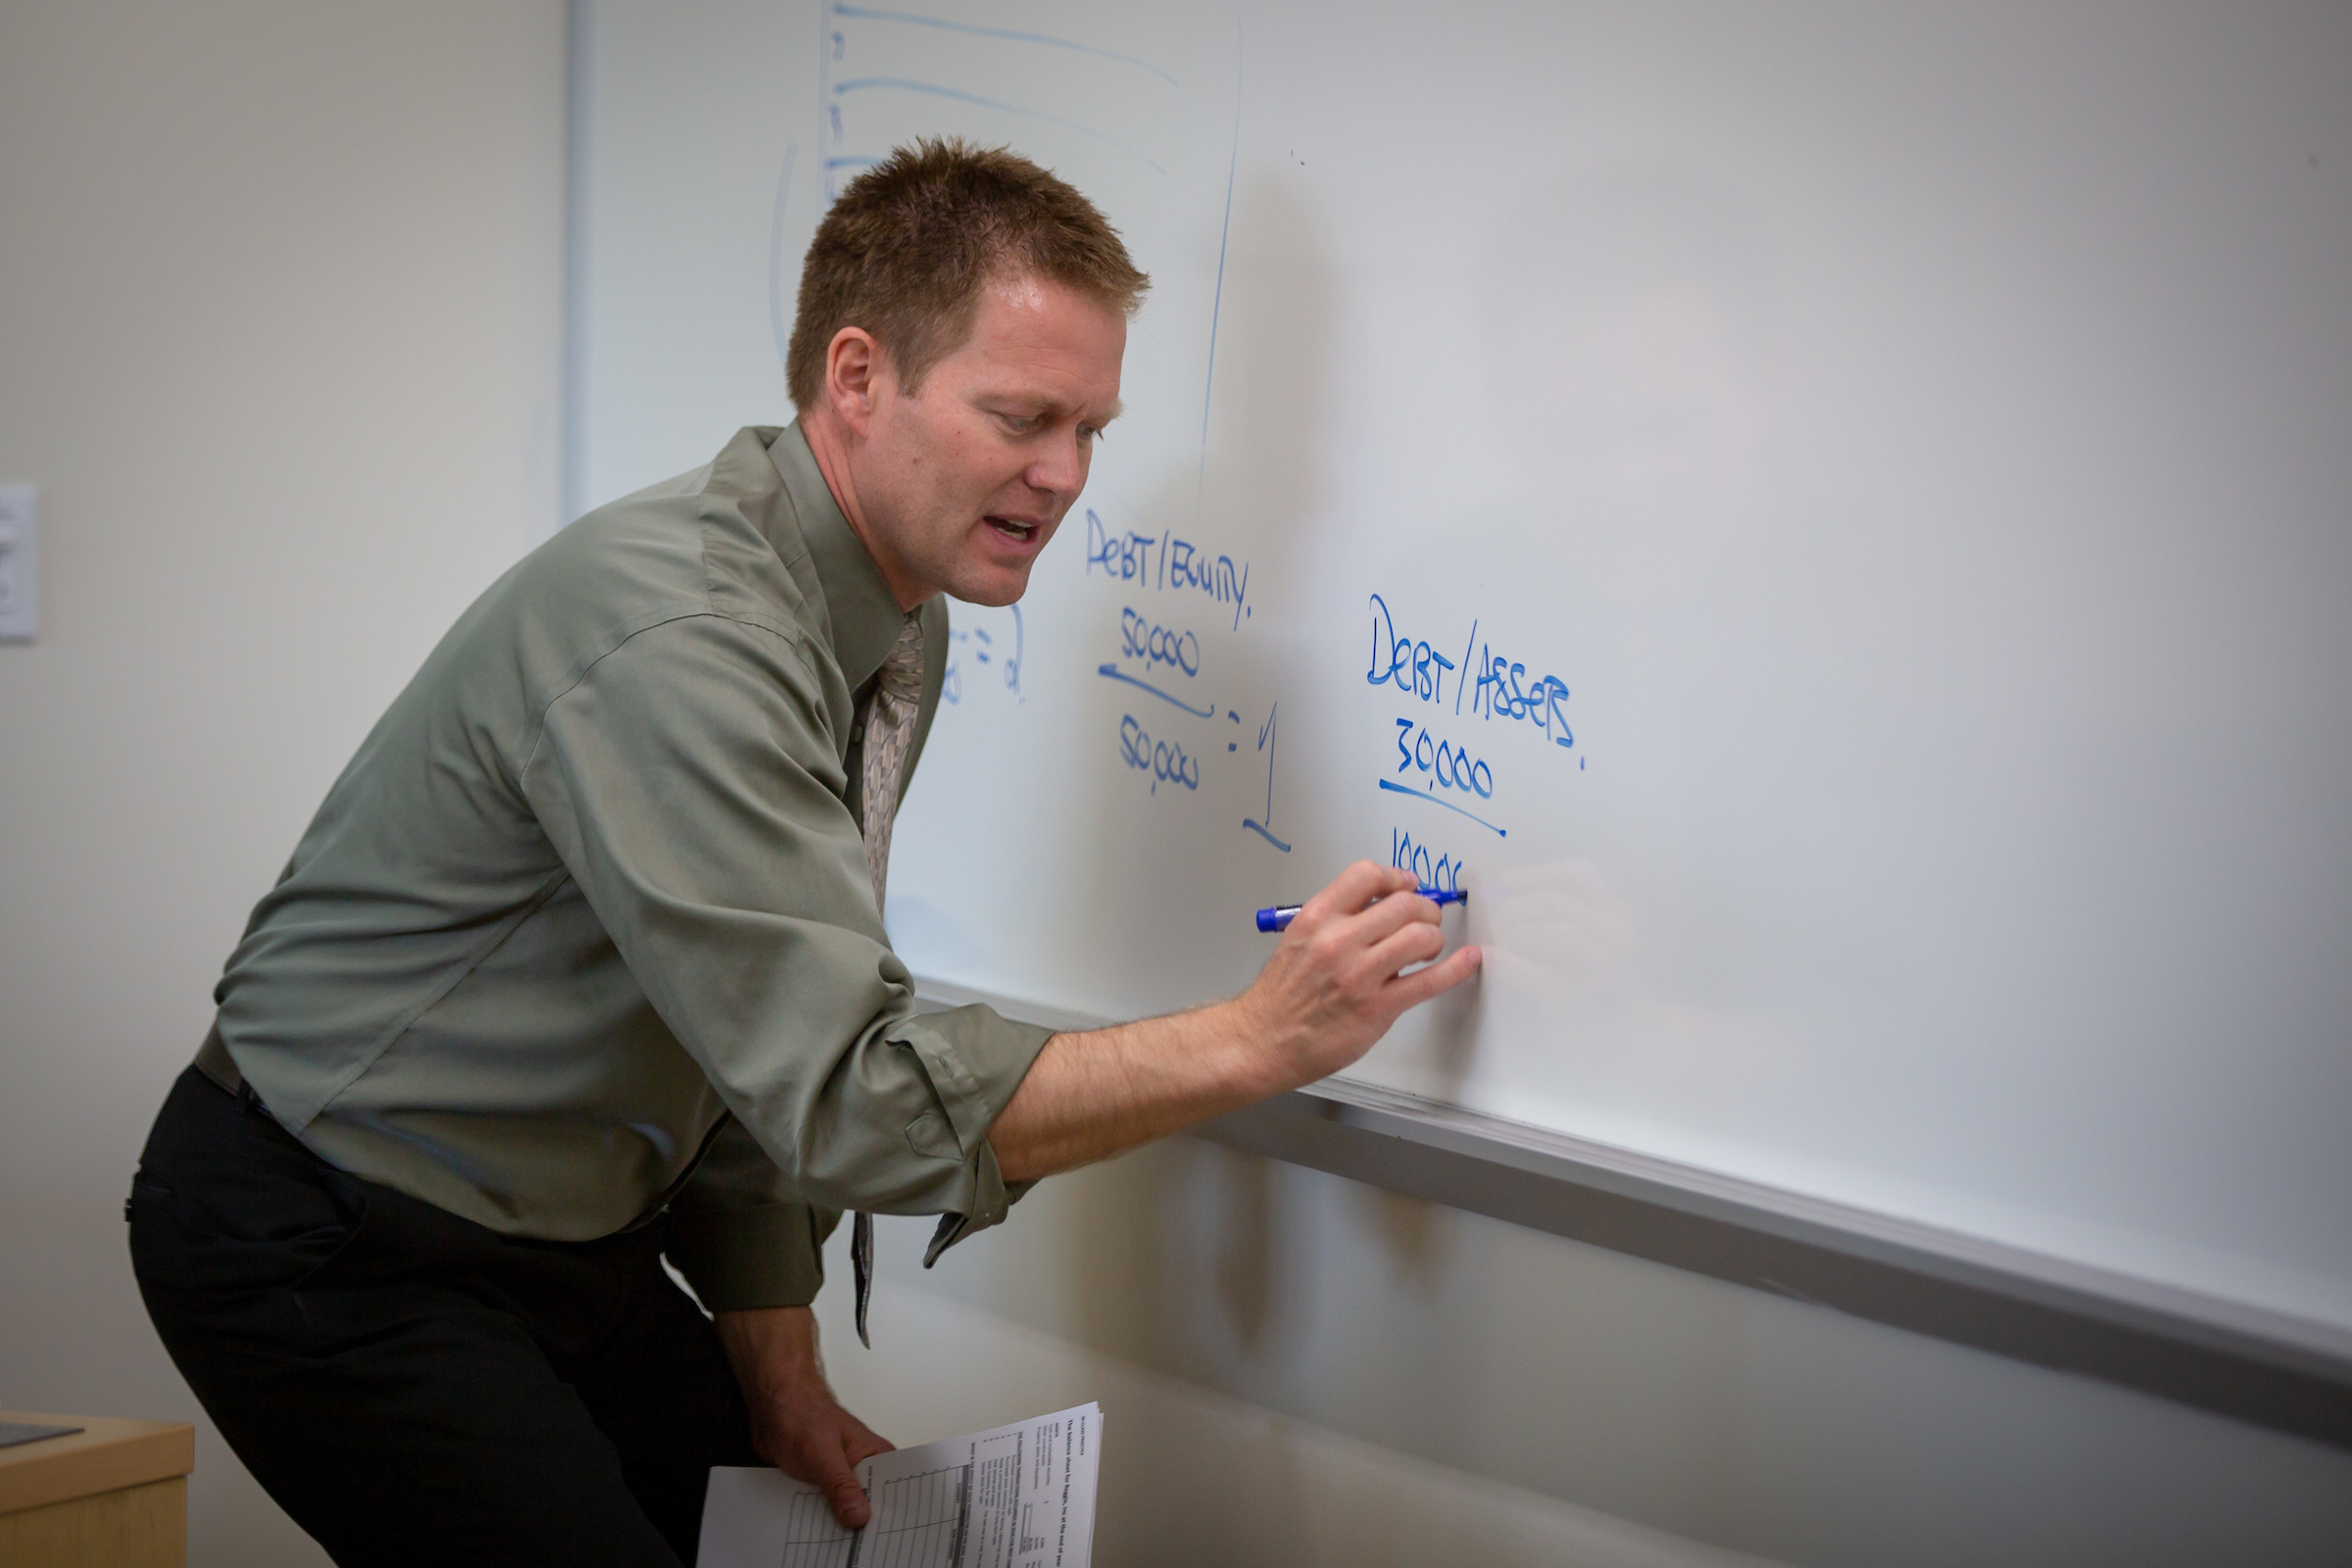 Professor writing on whiteboard